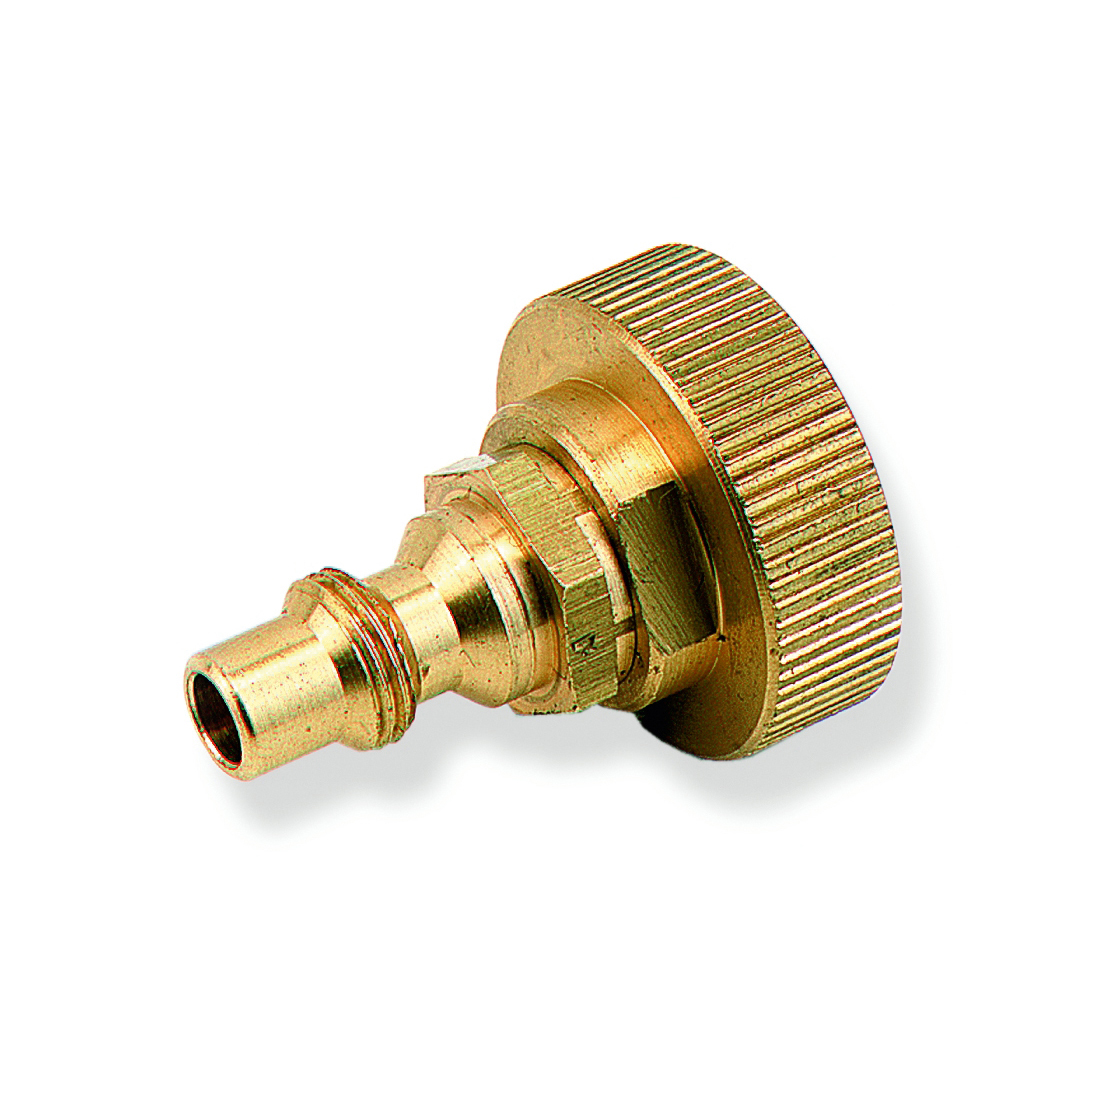 2762 - Pressure adapter for drain port